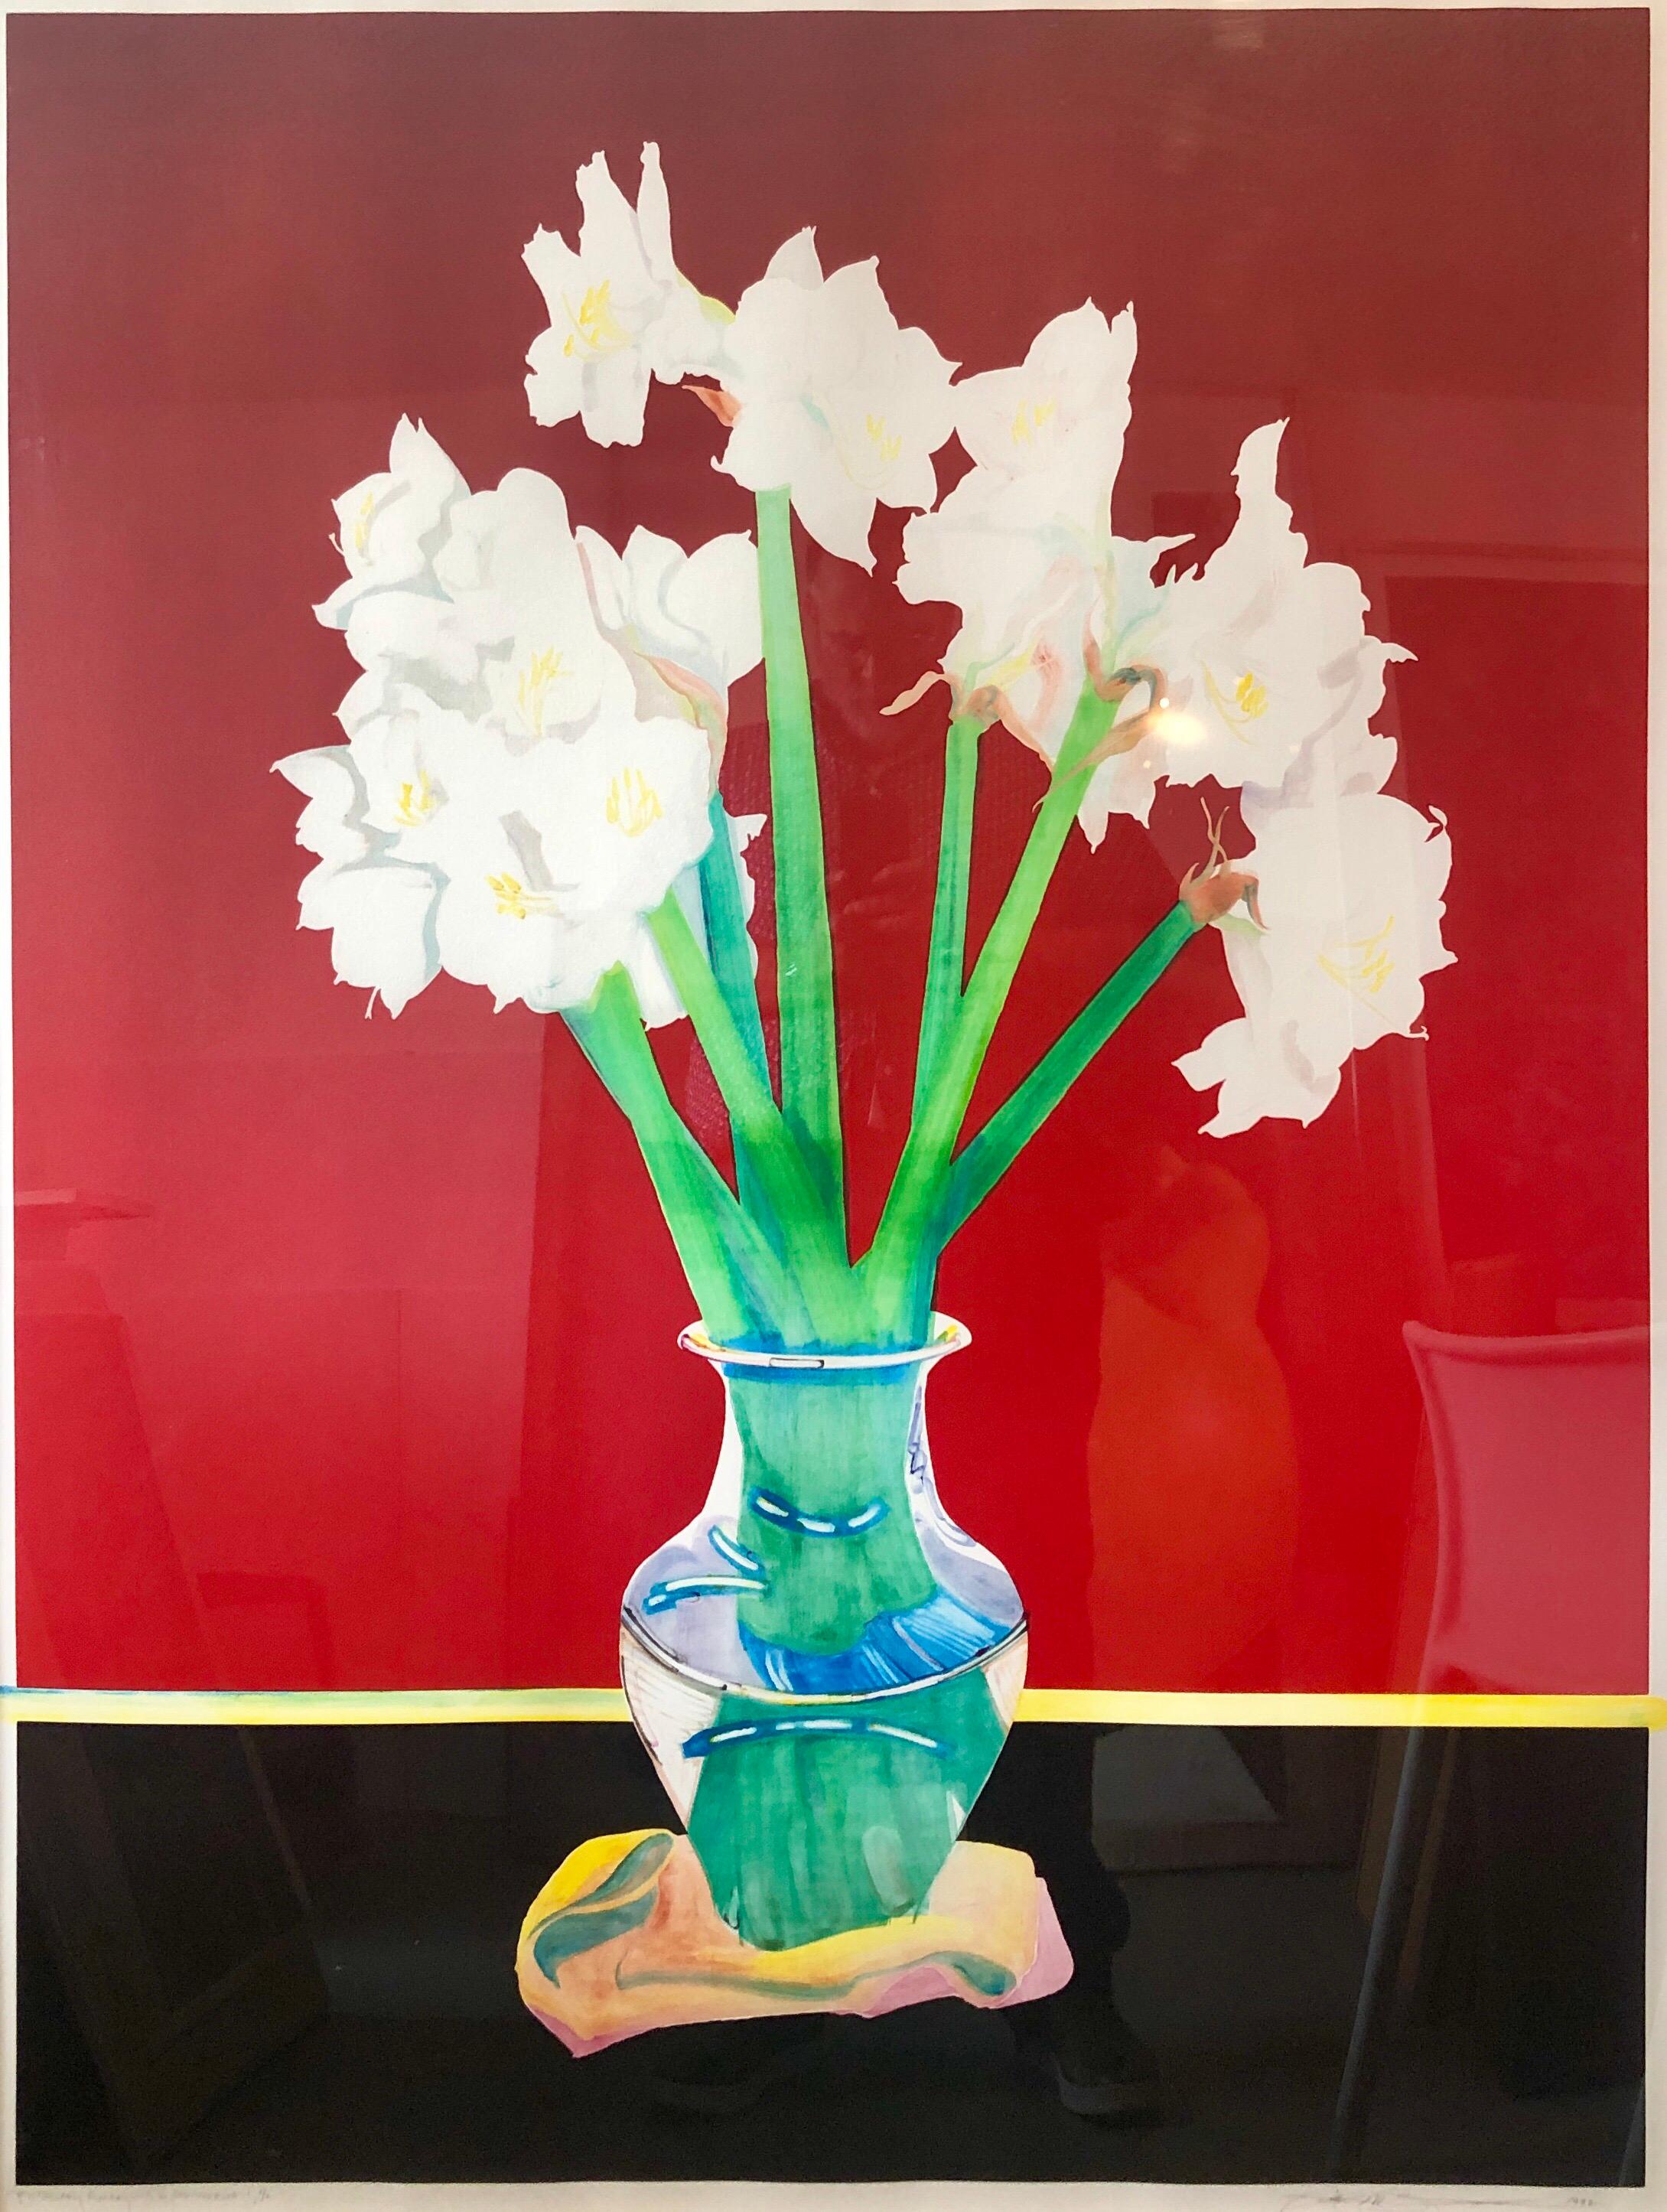 Großes kühnes, farbenfrohes Monoprint-Gemälde, Blumengemälde in Vase, Februar Amaryllis-Blumen